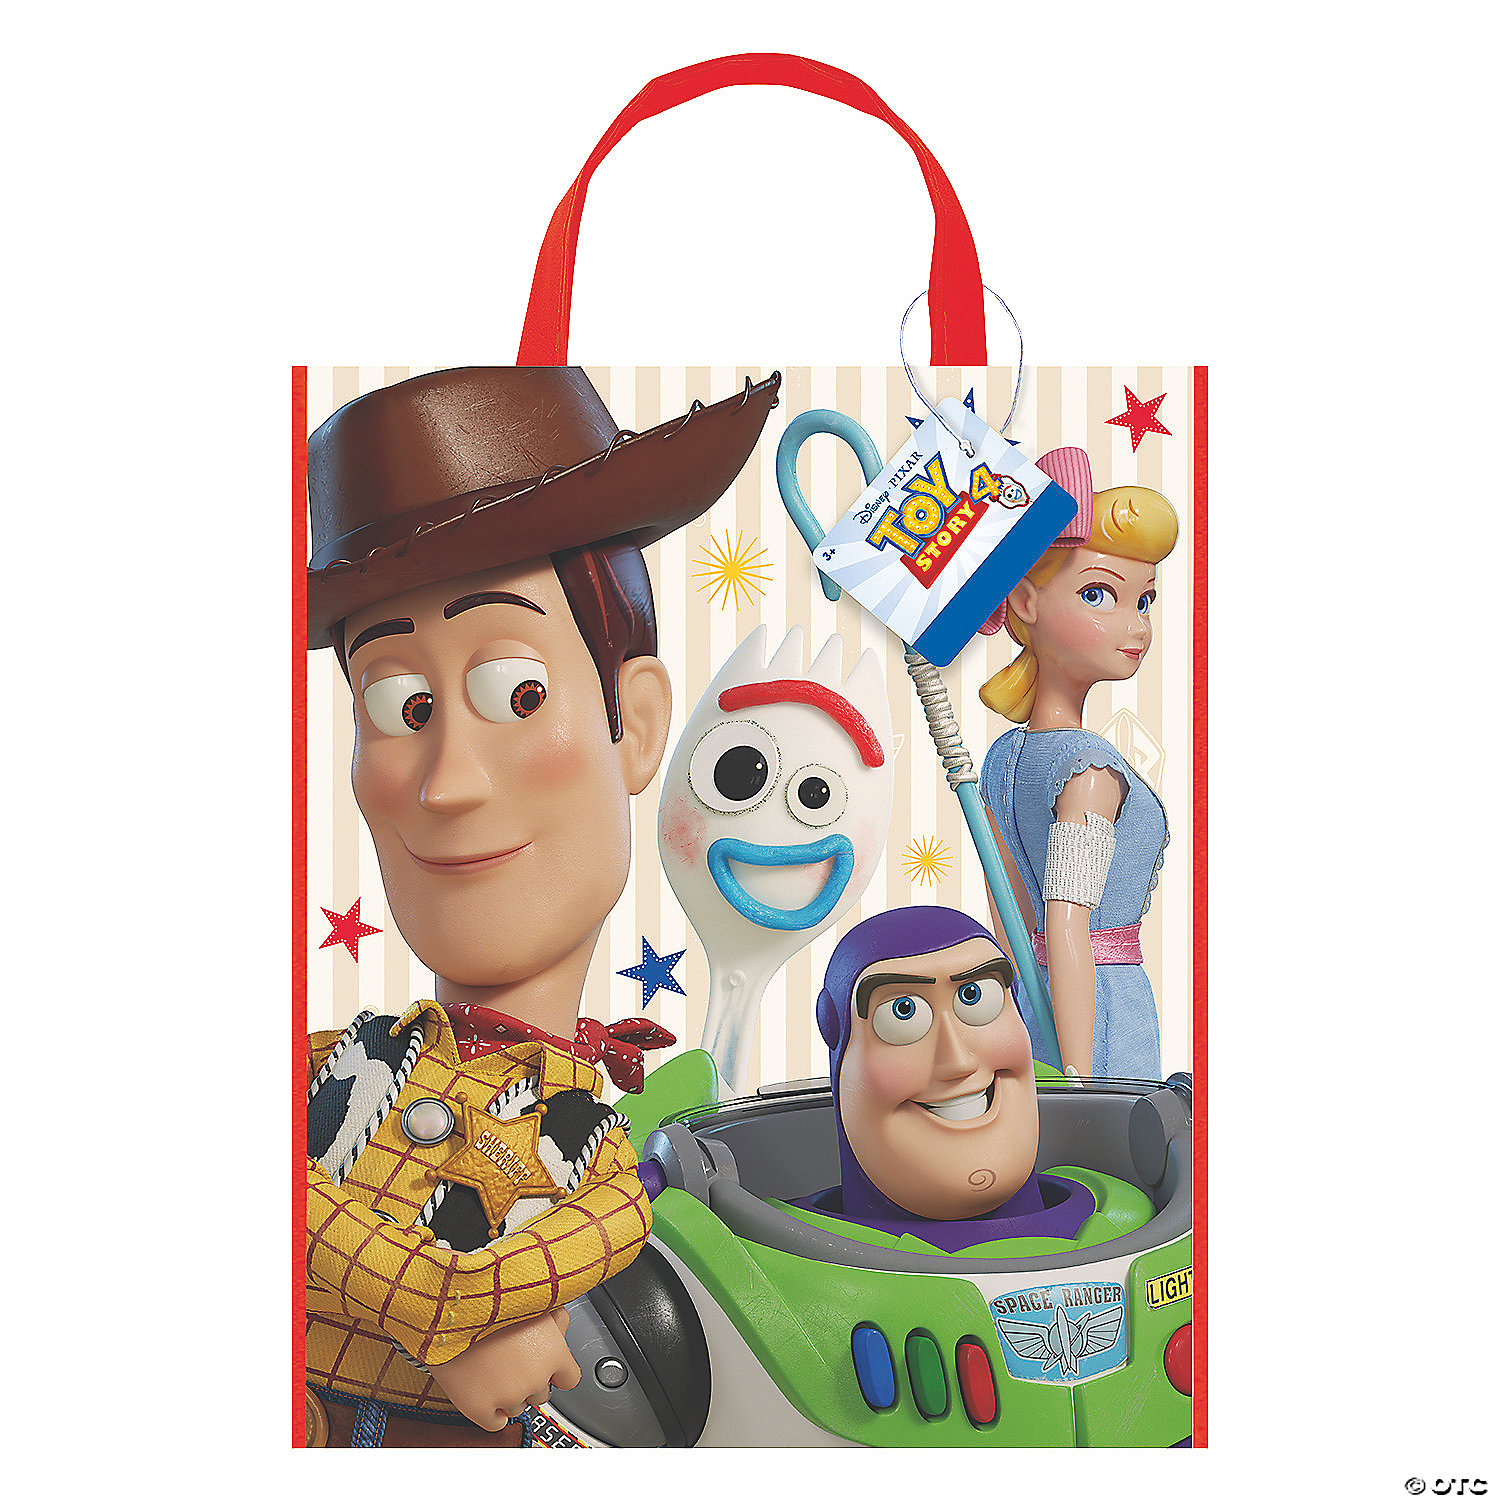 48 Toy Story 3 Disney Pixar Coloring Book & Crayon Set Child Party Bag Fillers 